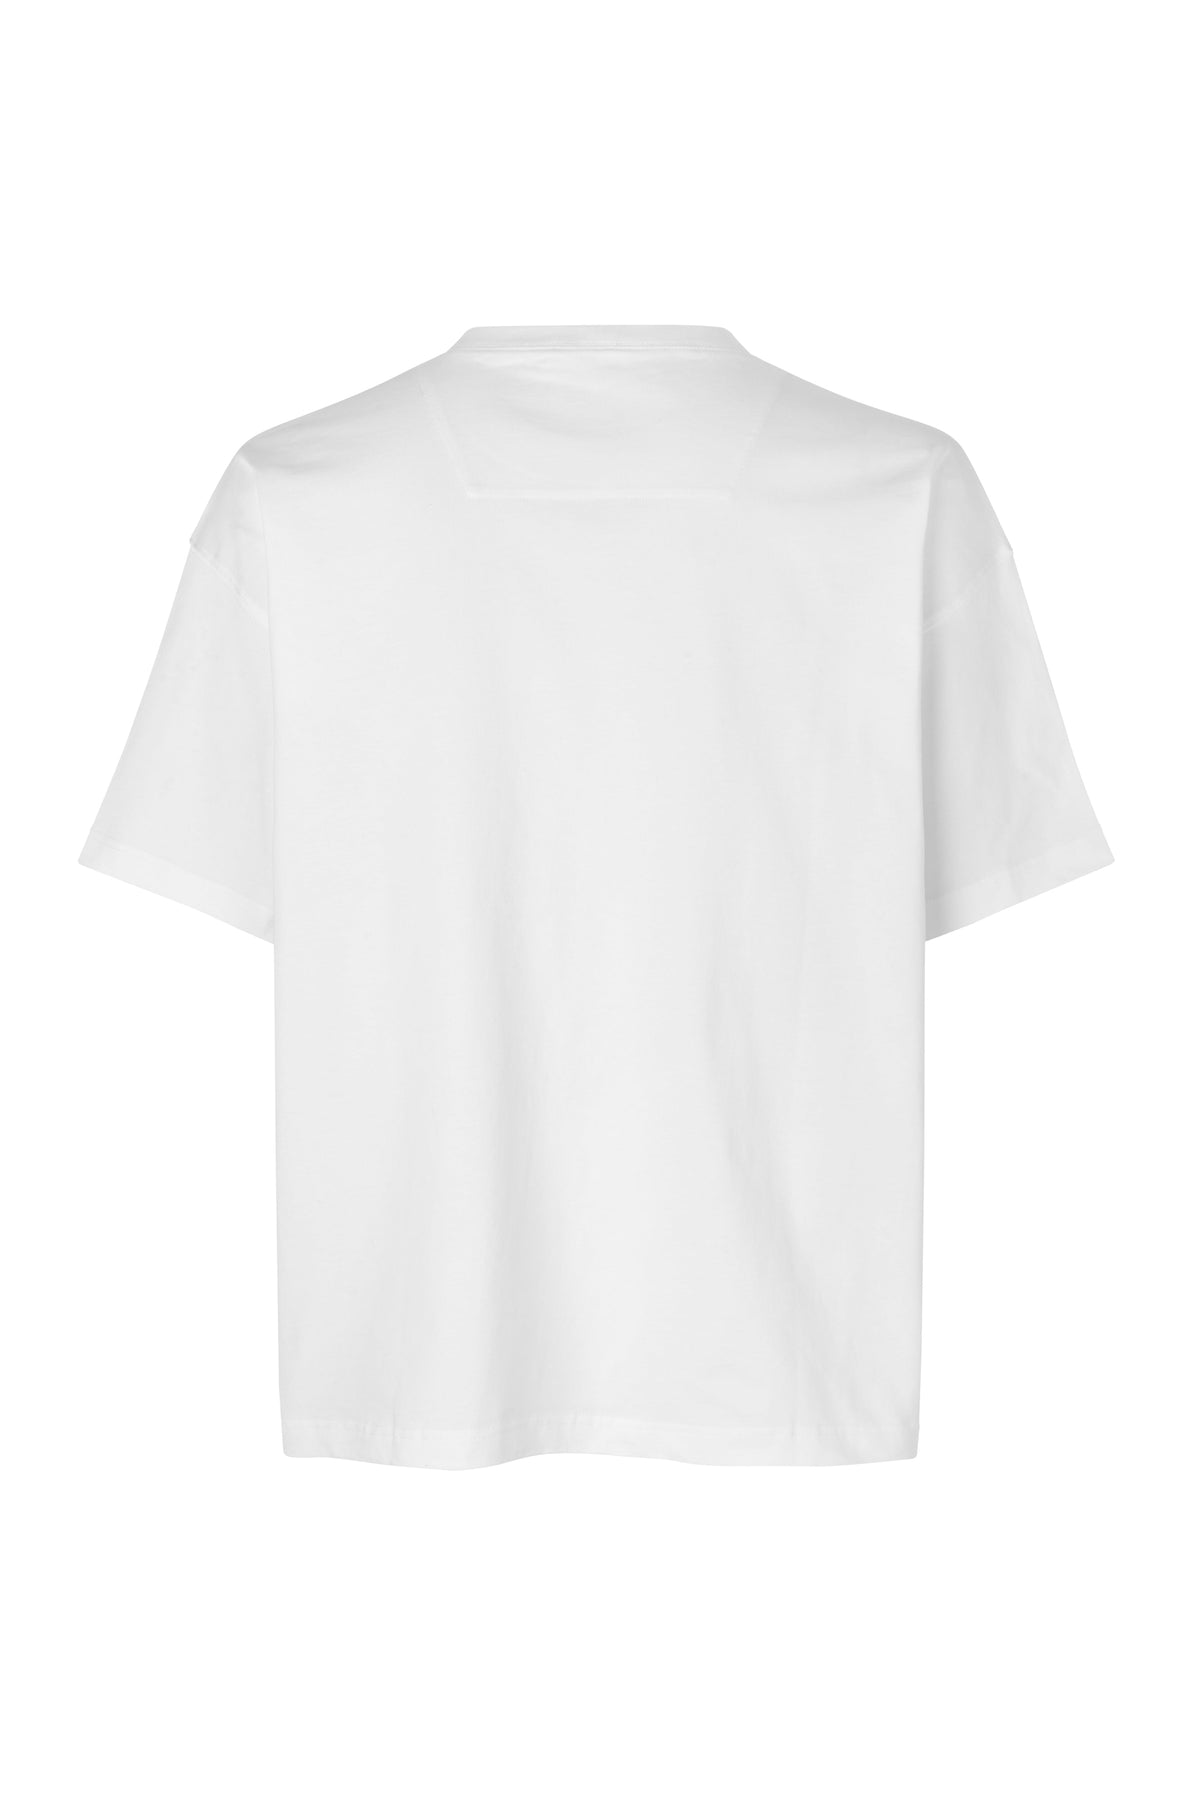 Hjalmer T-shirt 11725 - White